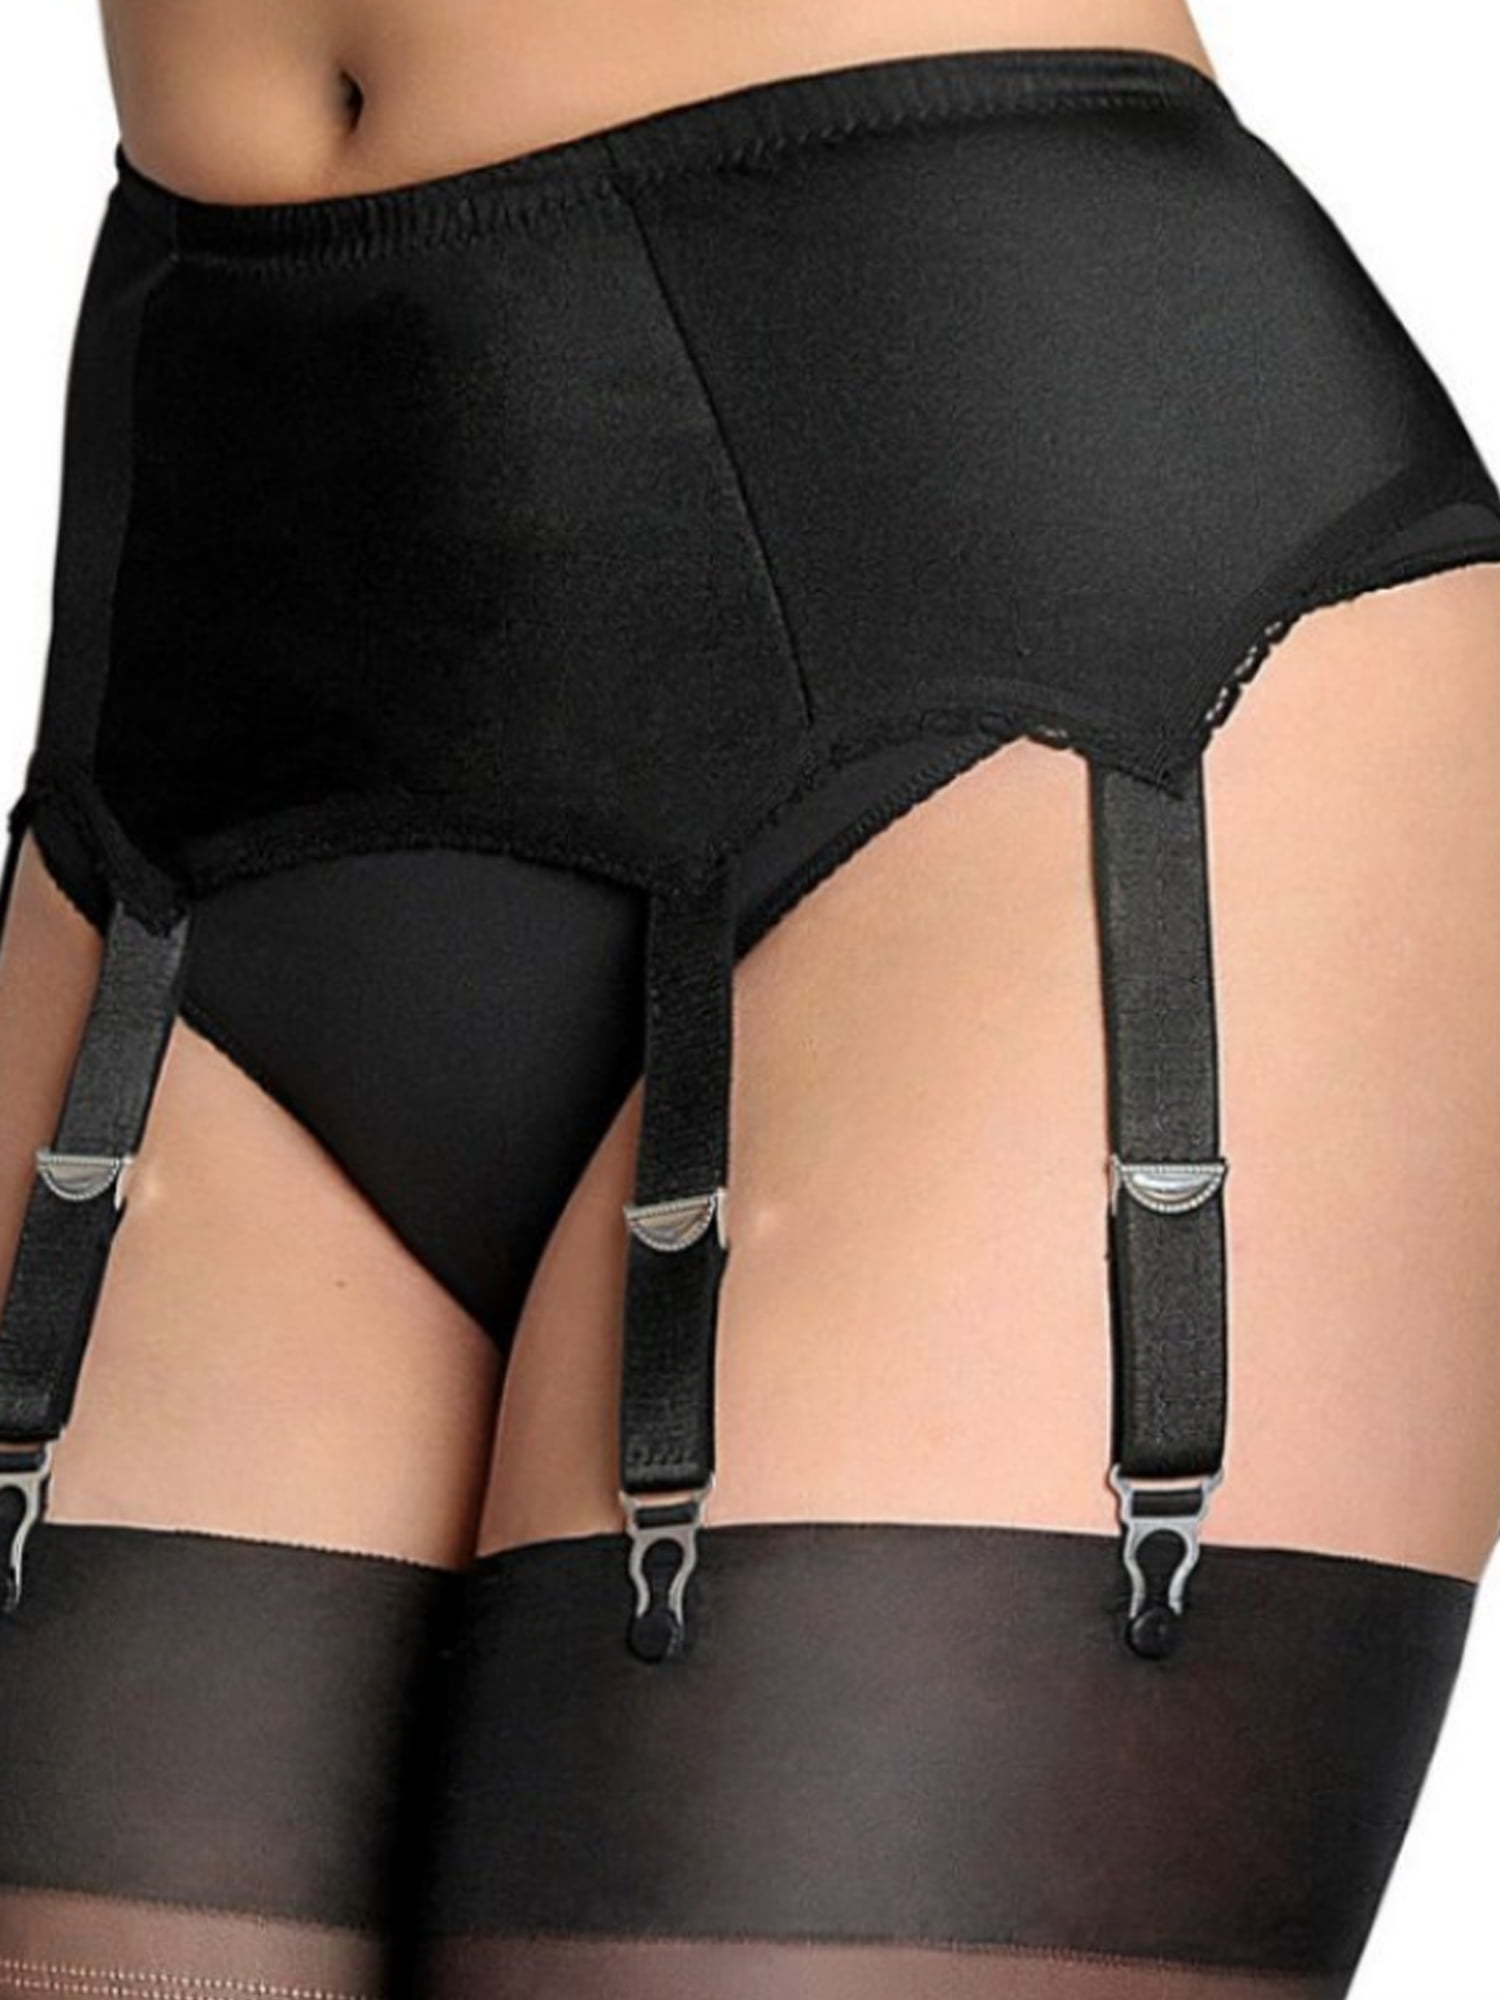 Women Lace Thigh-Highs Stockings Suspenders Garter Belt Suspender for Stockin TB 